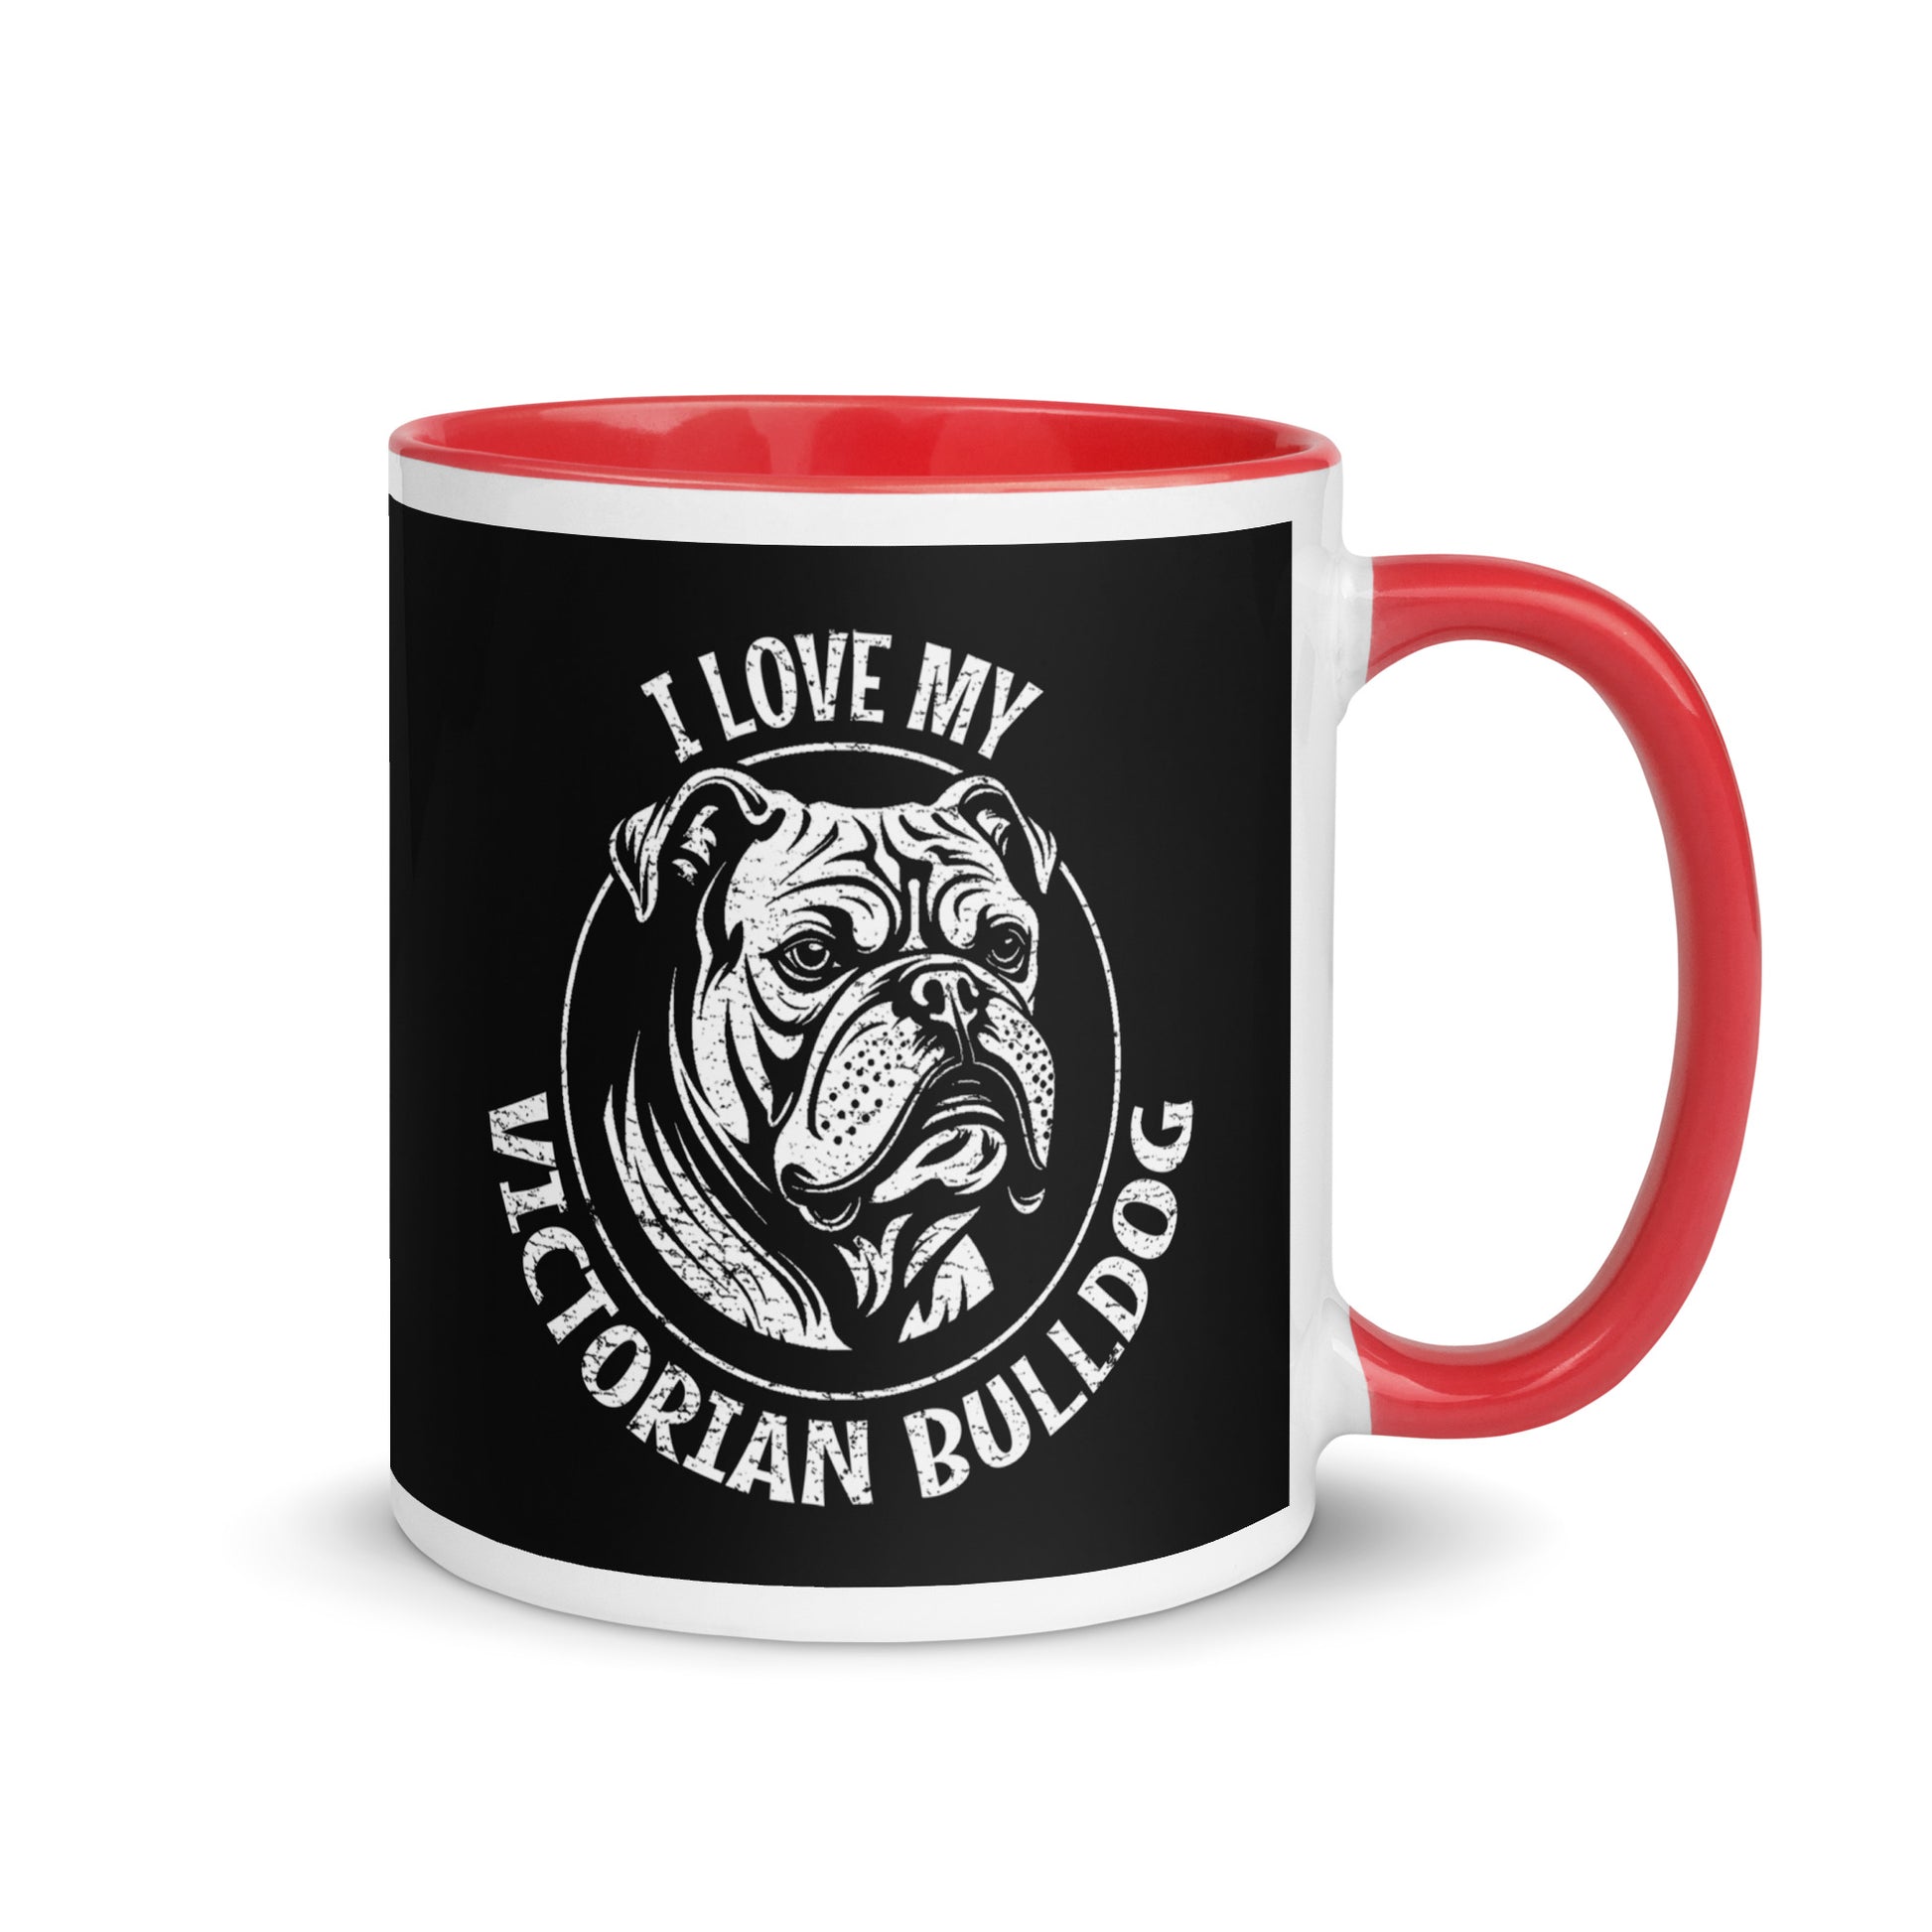 Victorian Bulldog Mug, Victorian Bulldog gift, gift for dog mom, custom dog gift, dog owner gift, pet memorial gift